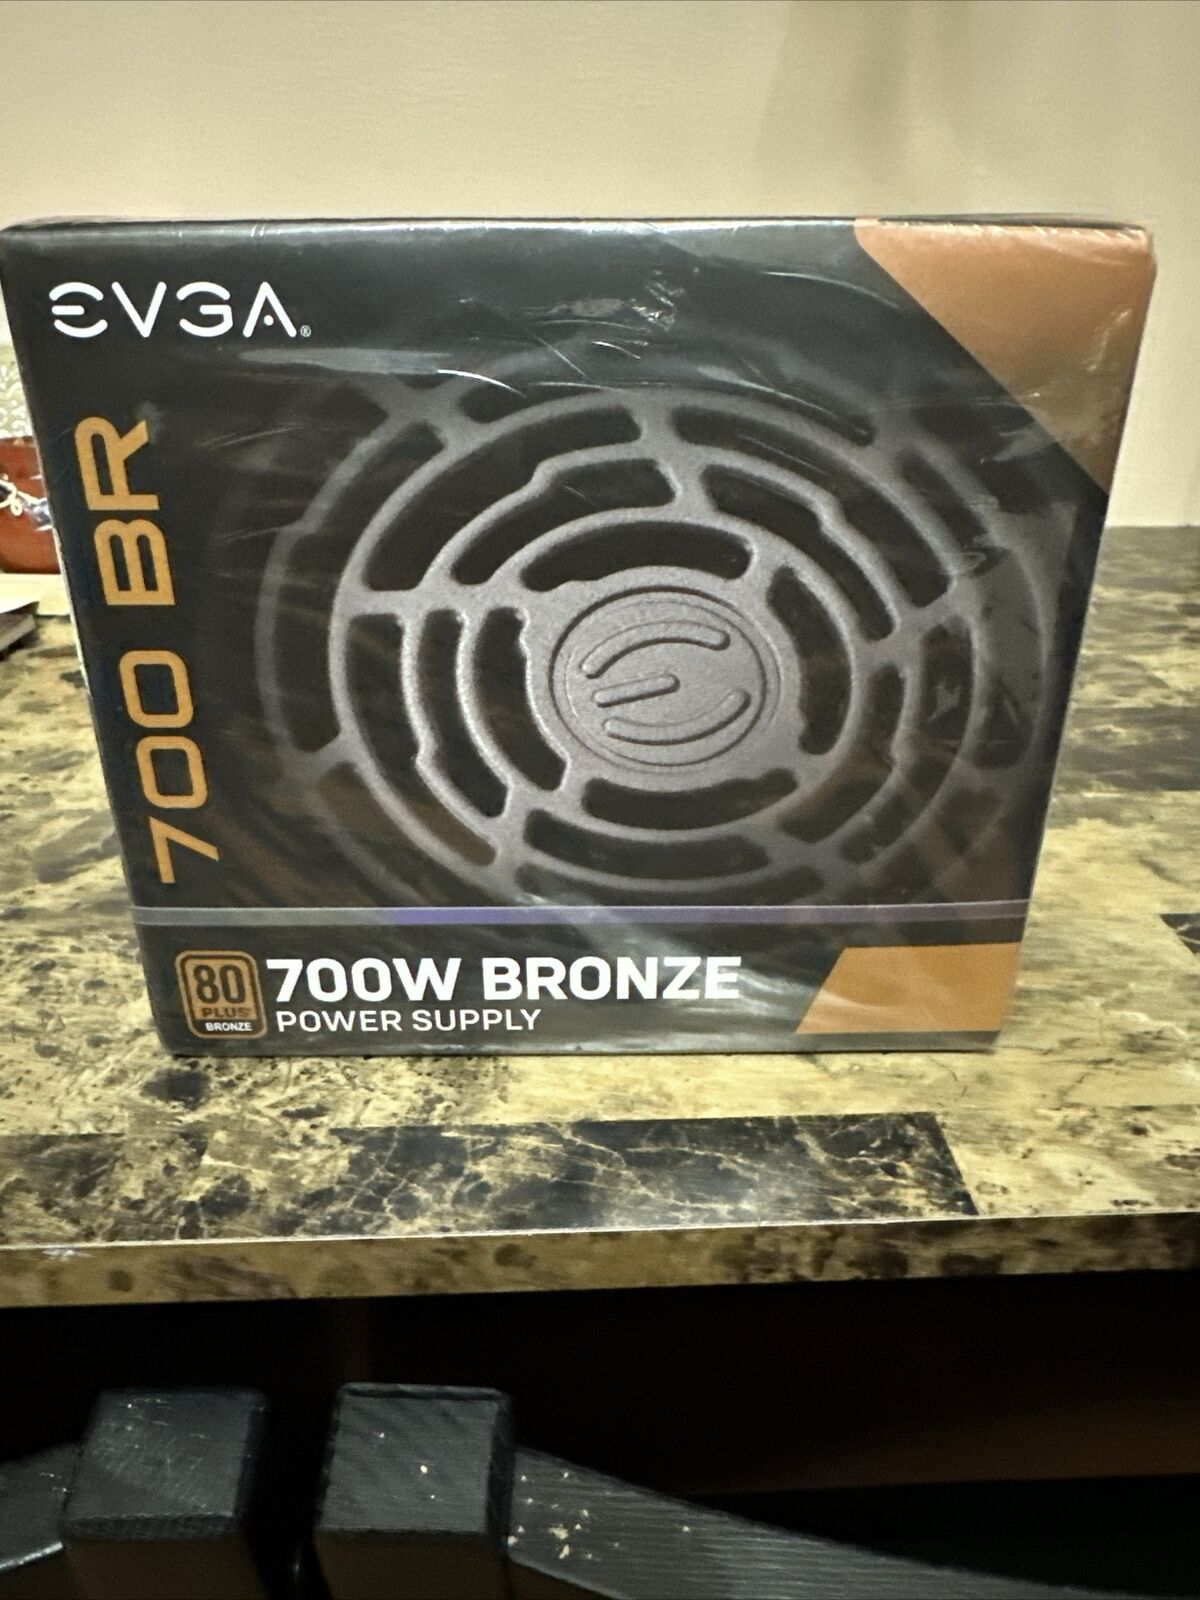 EVGA 700 BR 700W Bronze Power Supply Unopened